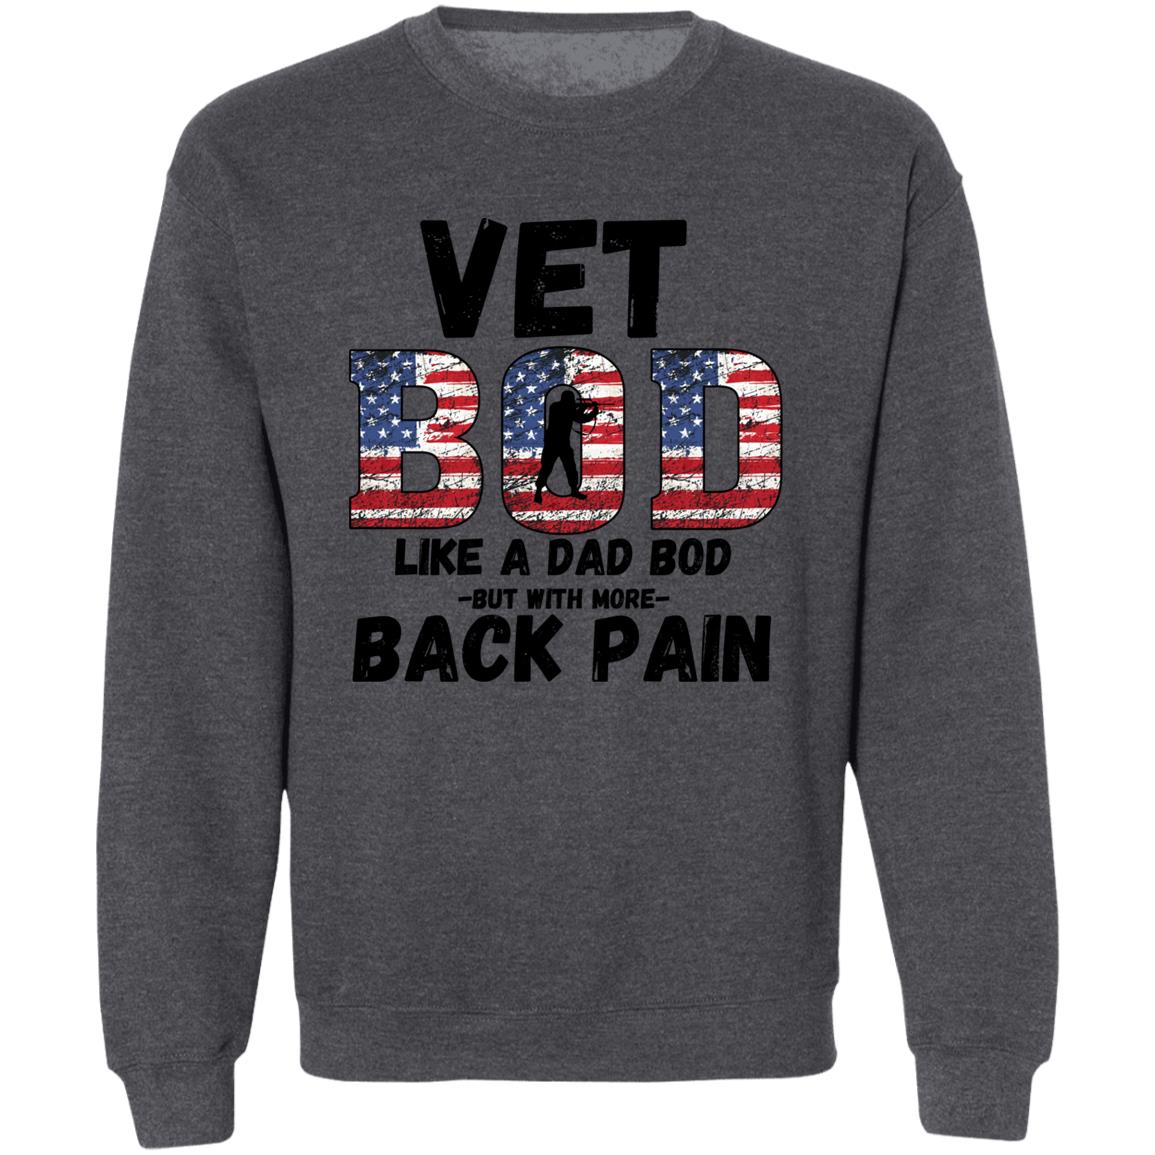 Vet Bod / Back Pain (Veterans) Pullover Crewneck Sweatshirt 8 oz (Closeout)